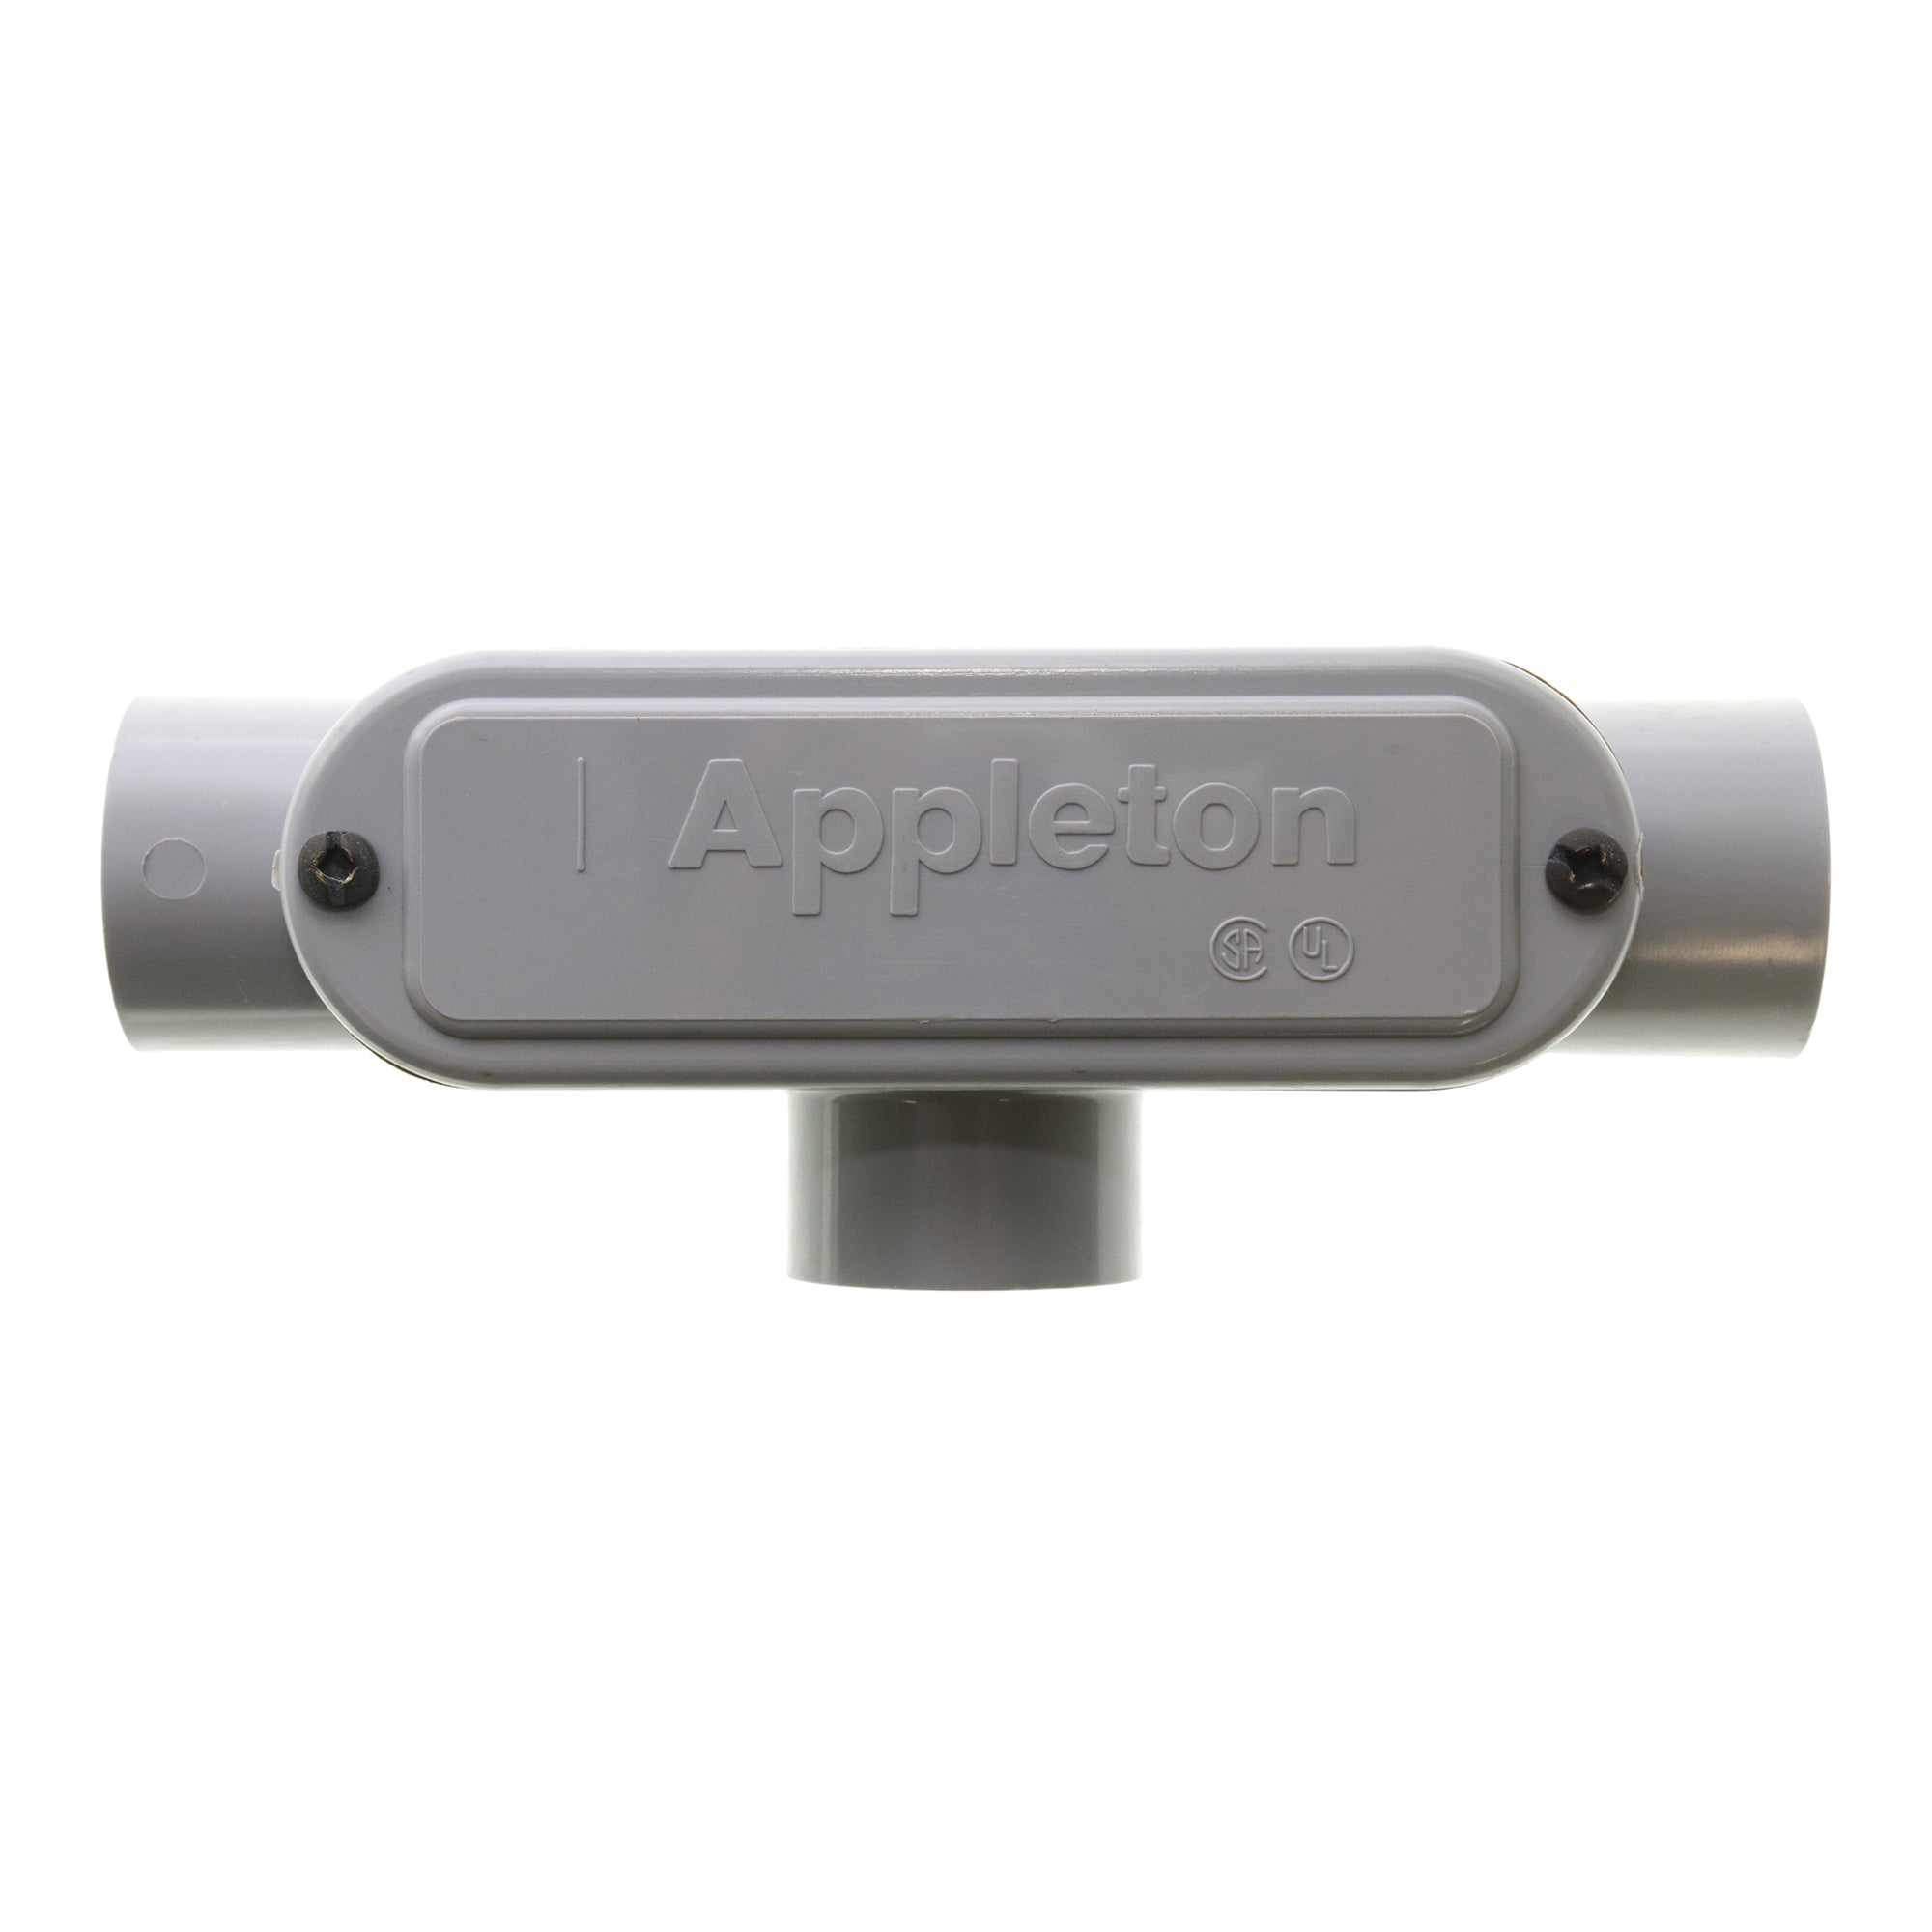 Appleton, APPLETON T100-P NON-METALLIC PVC TYPE-T CONDUIT ACCESS BODY, 1", (25-PACK)